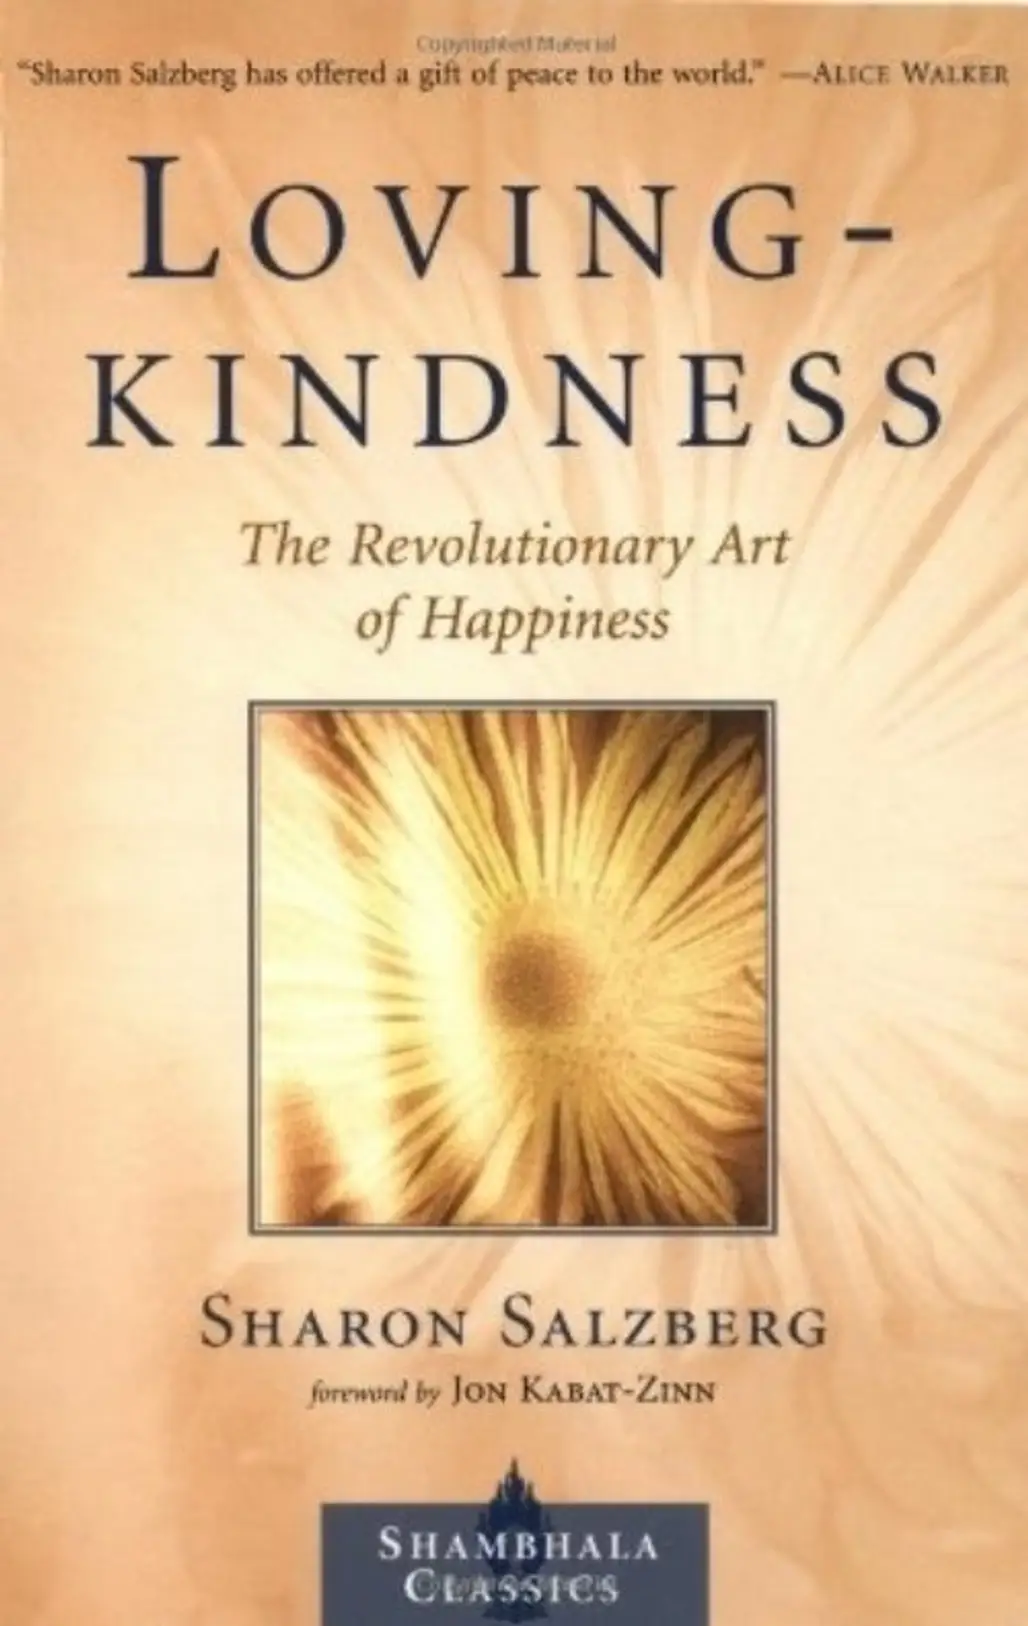 Loving Kindness: the Revolutionary Art of Happiness by Sharon Salzberg